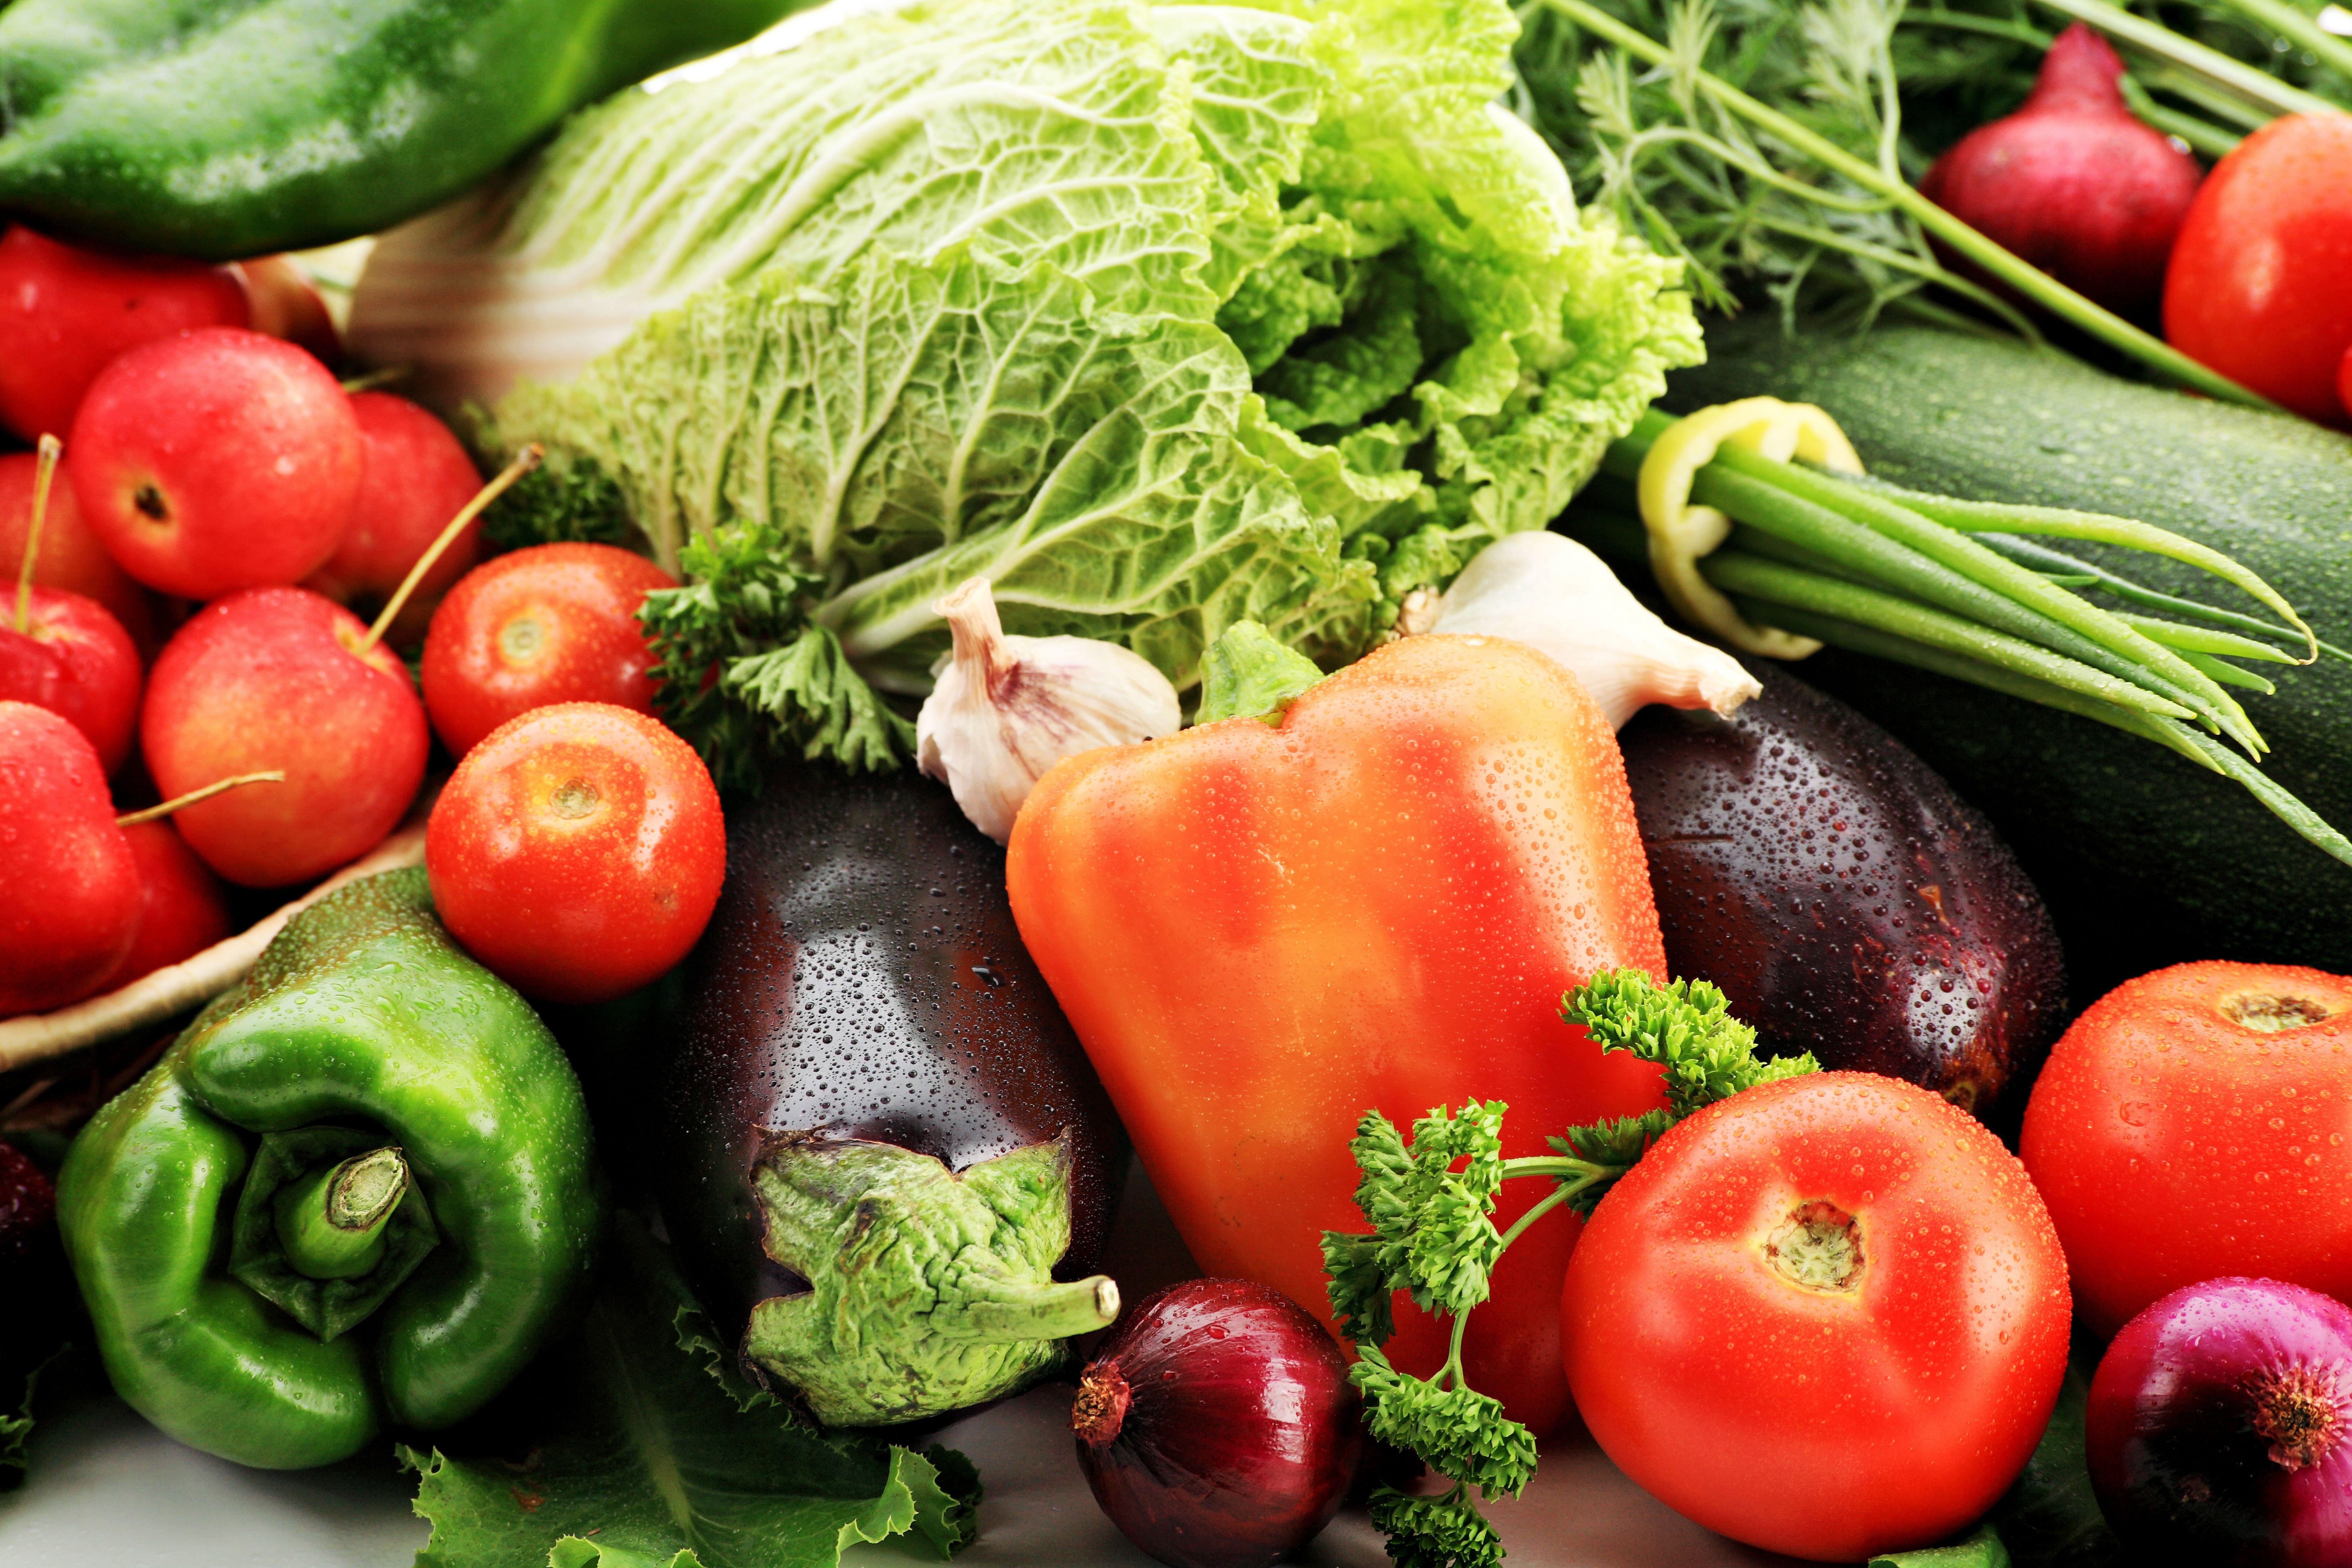 Wallpaper Vegetables Food download photo